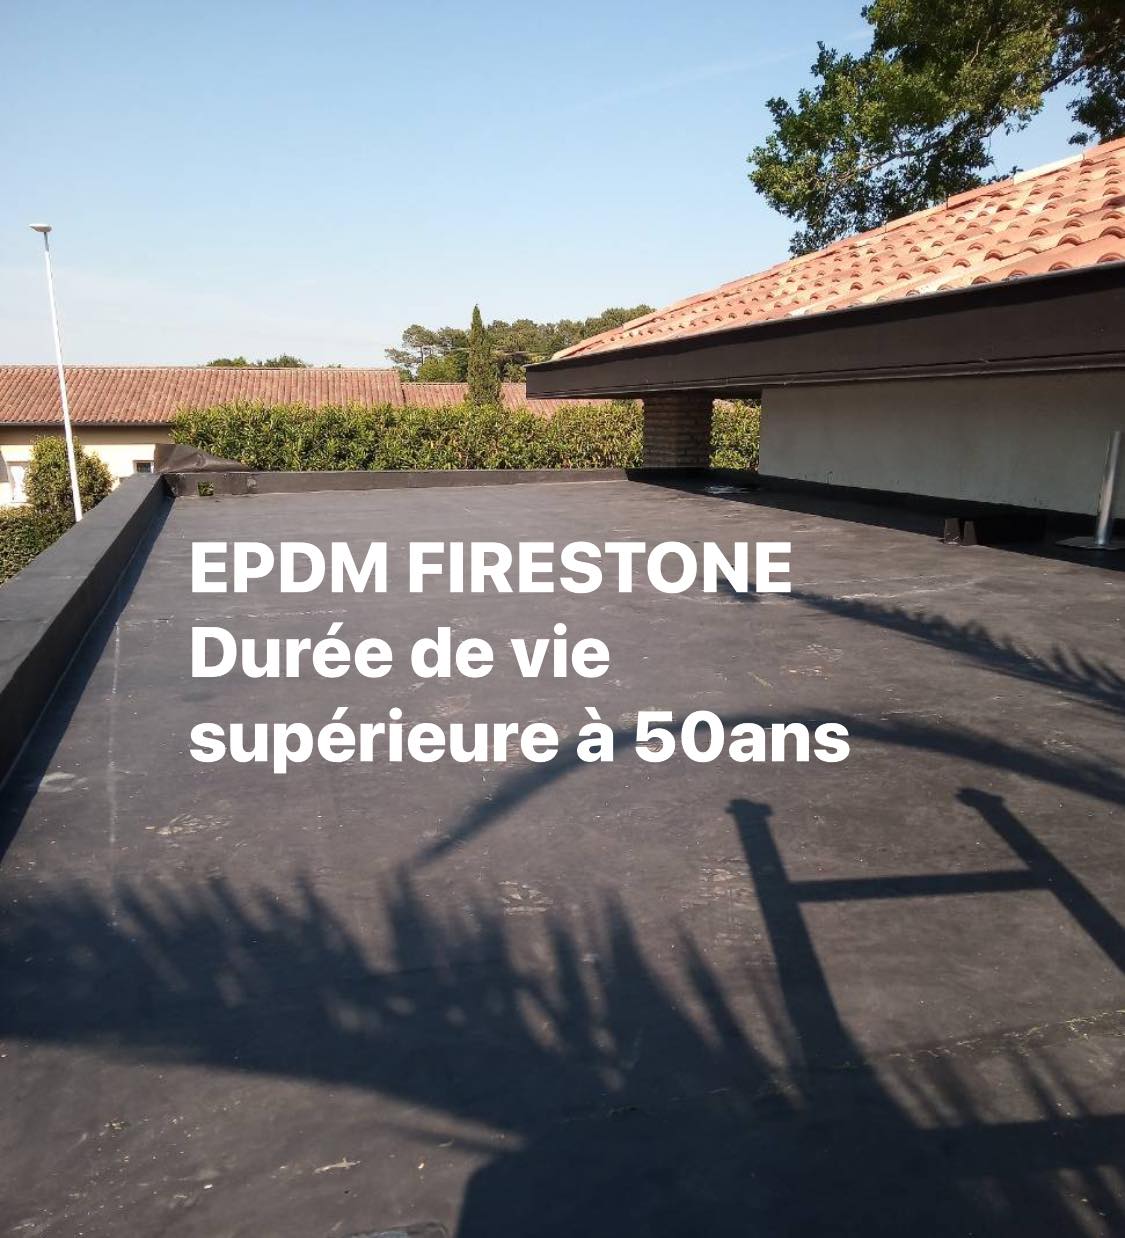 Epdm firestone